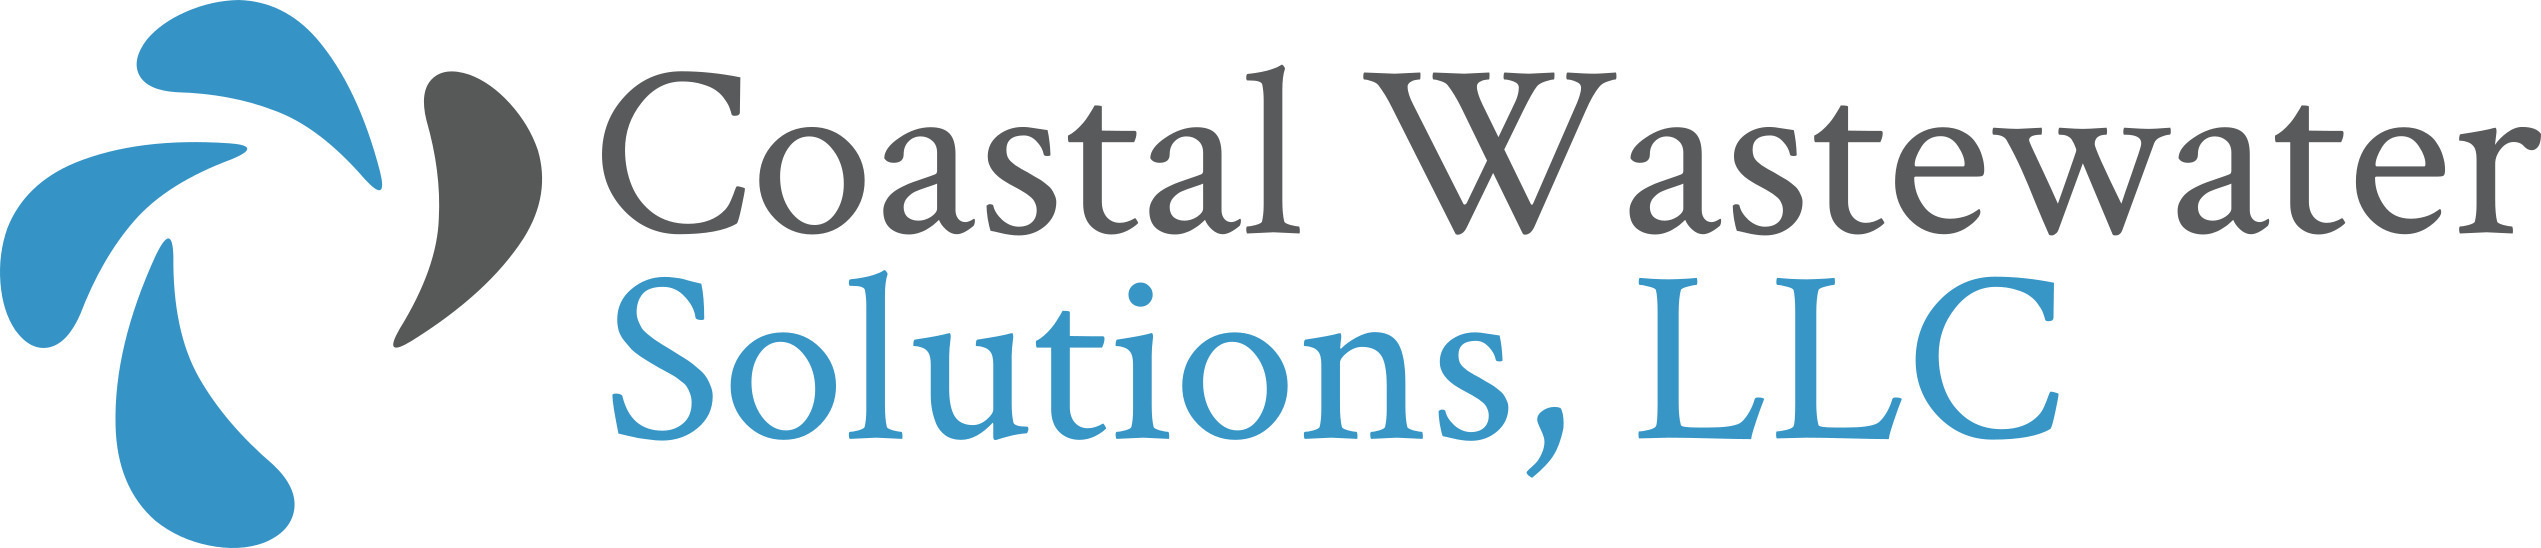 Coastal Wastewater Solutions